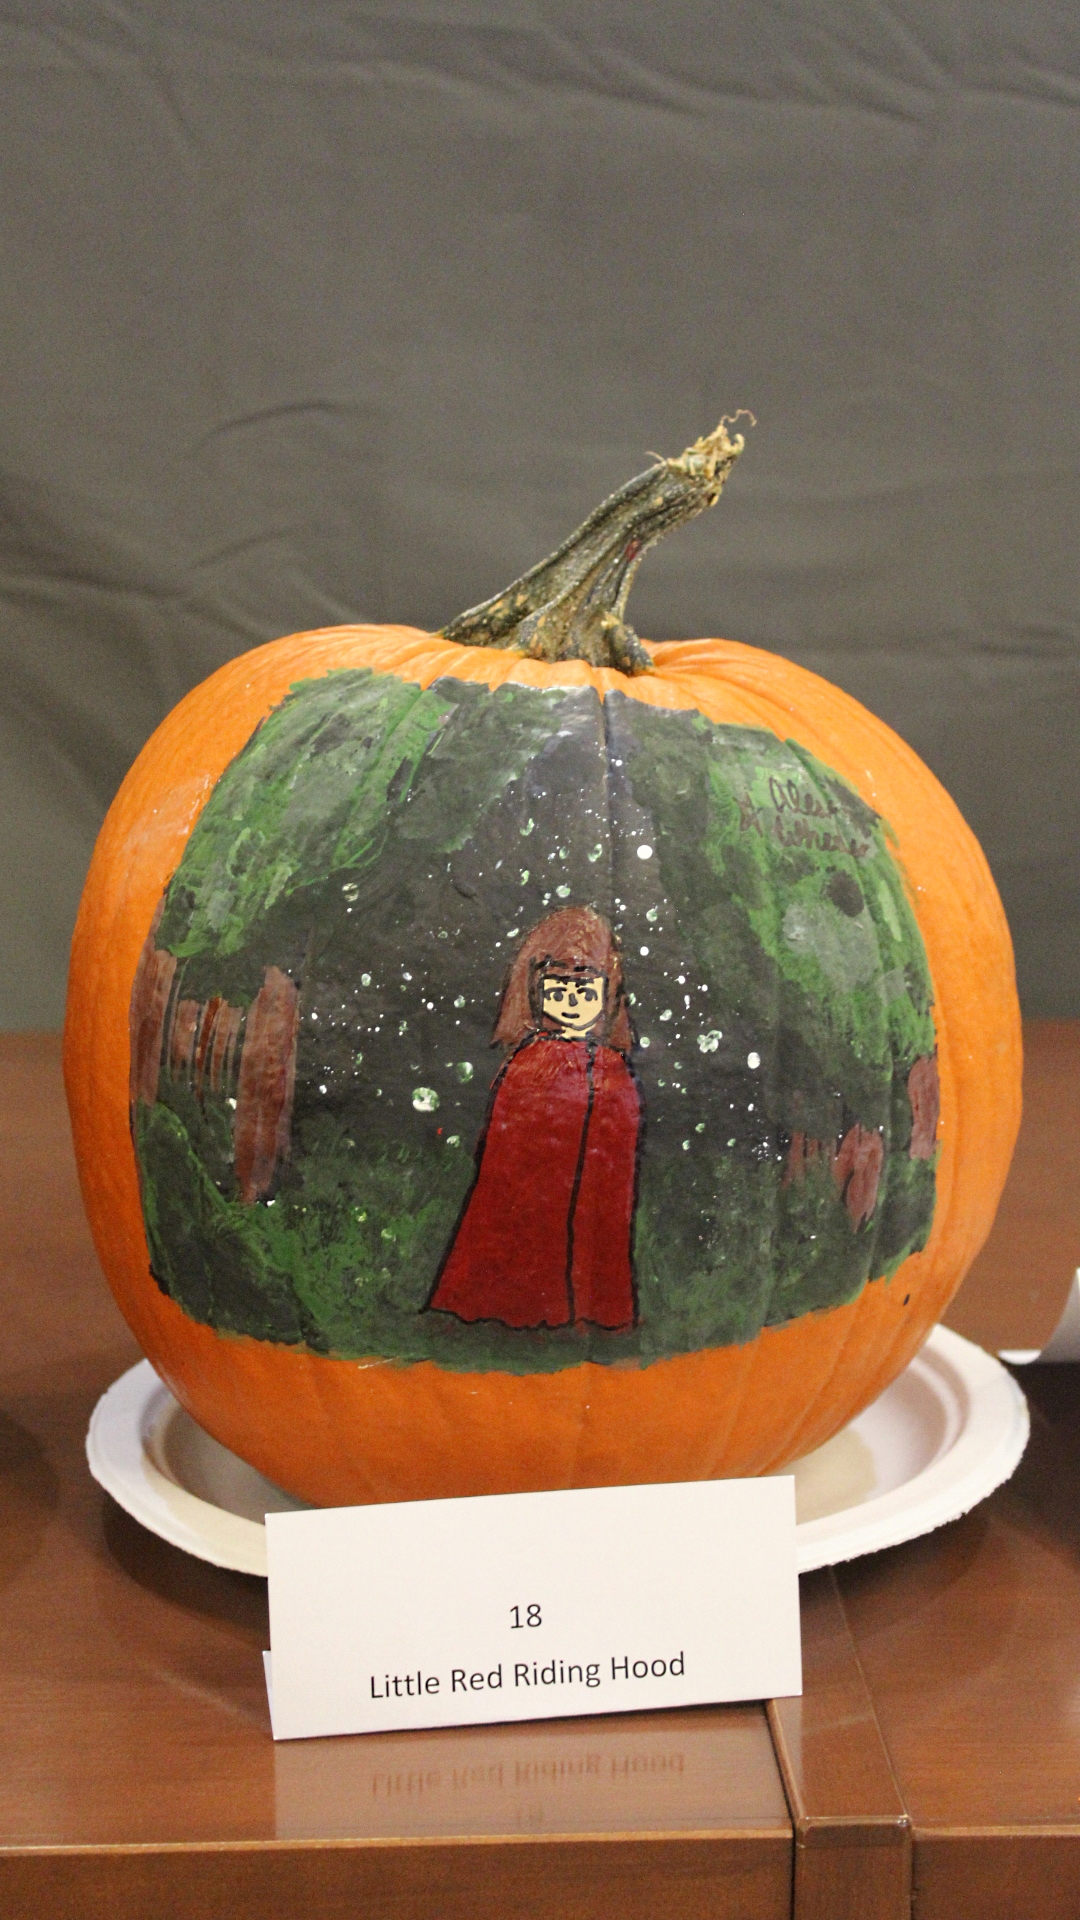 Pumpkin decorated as "Little Red Riding Hood"